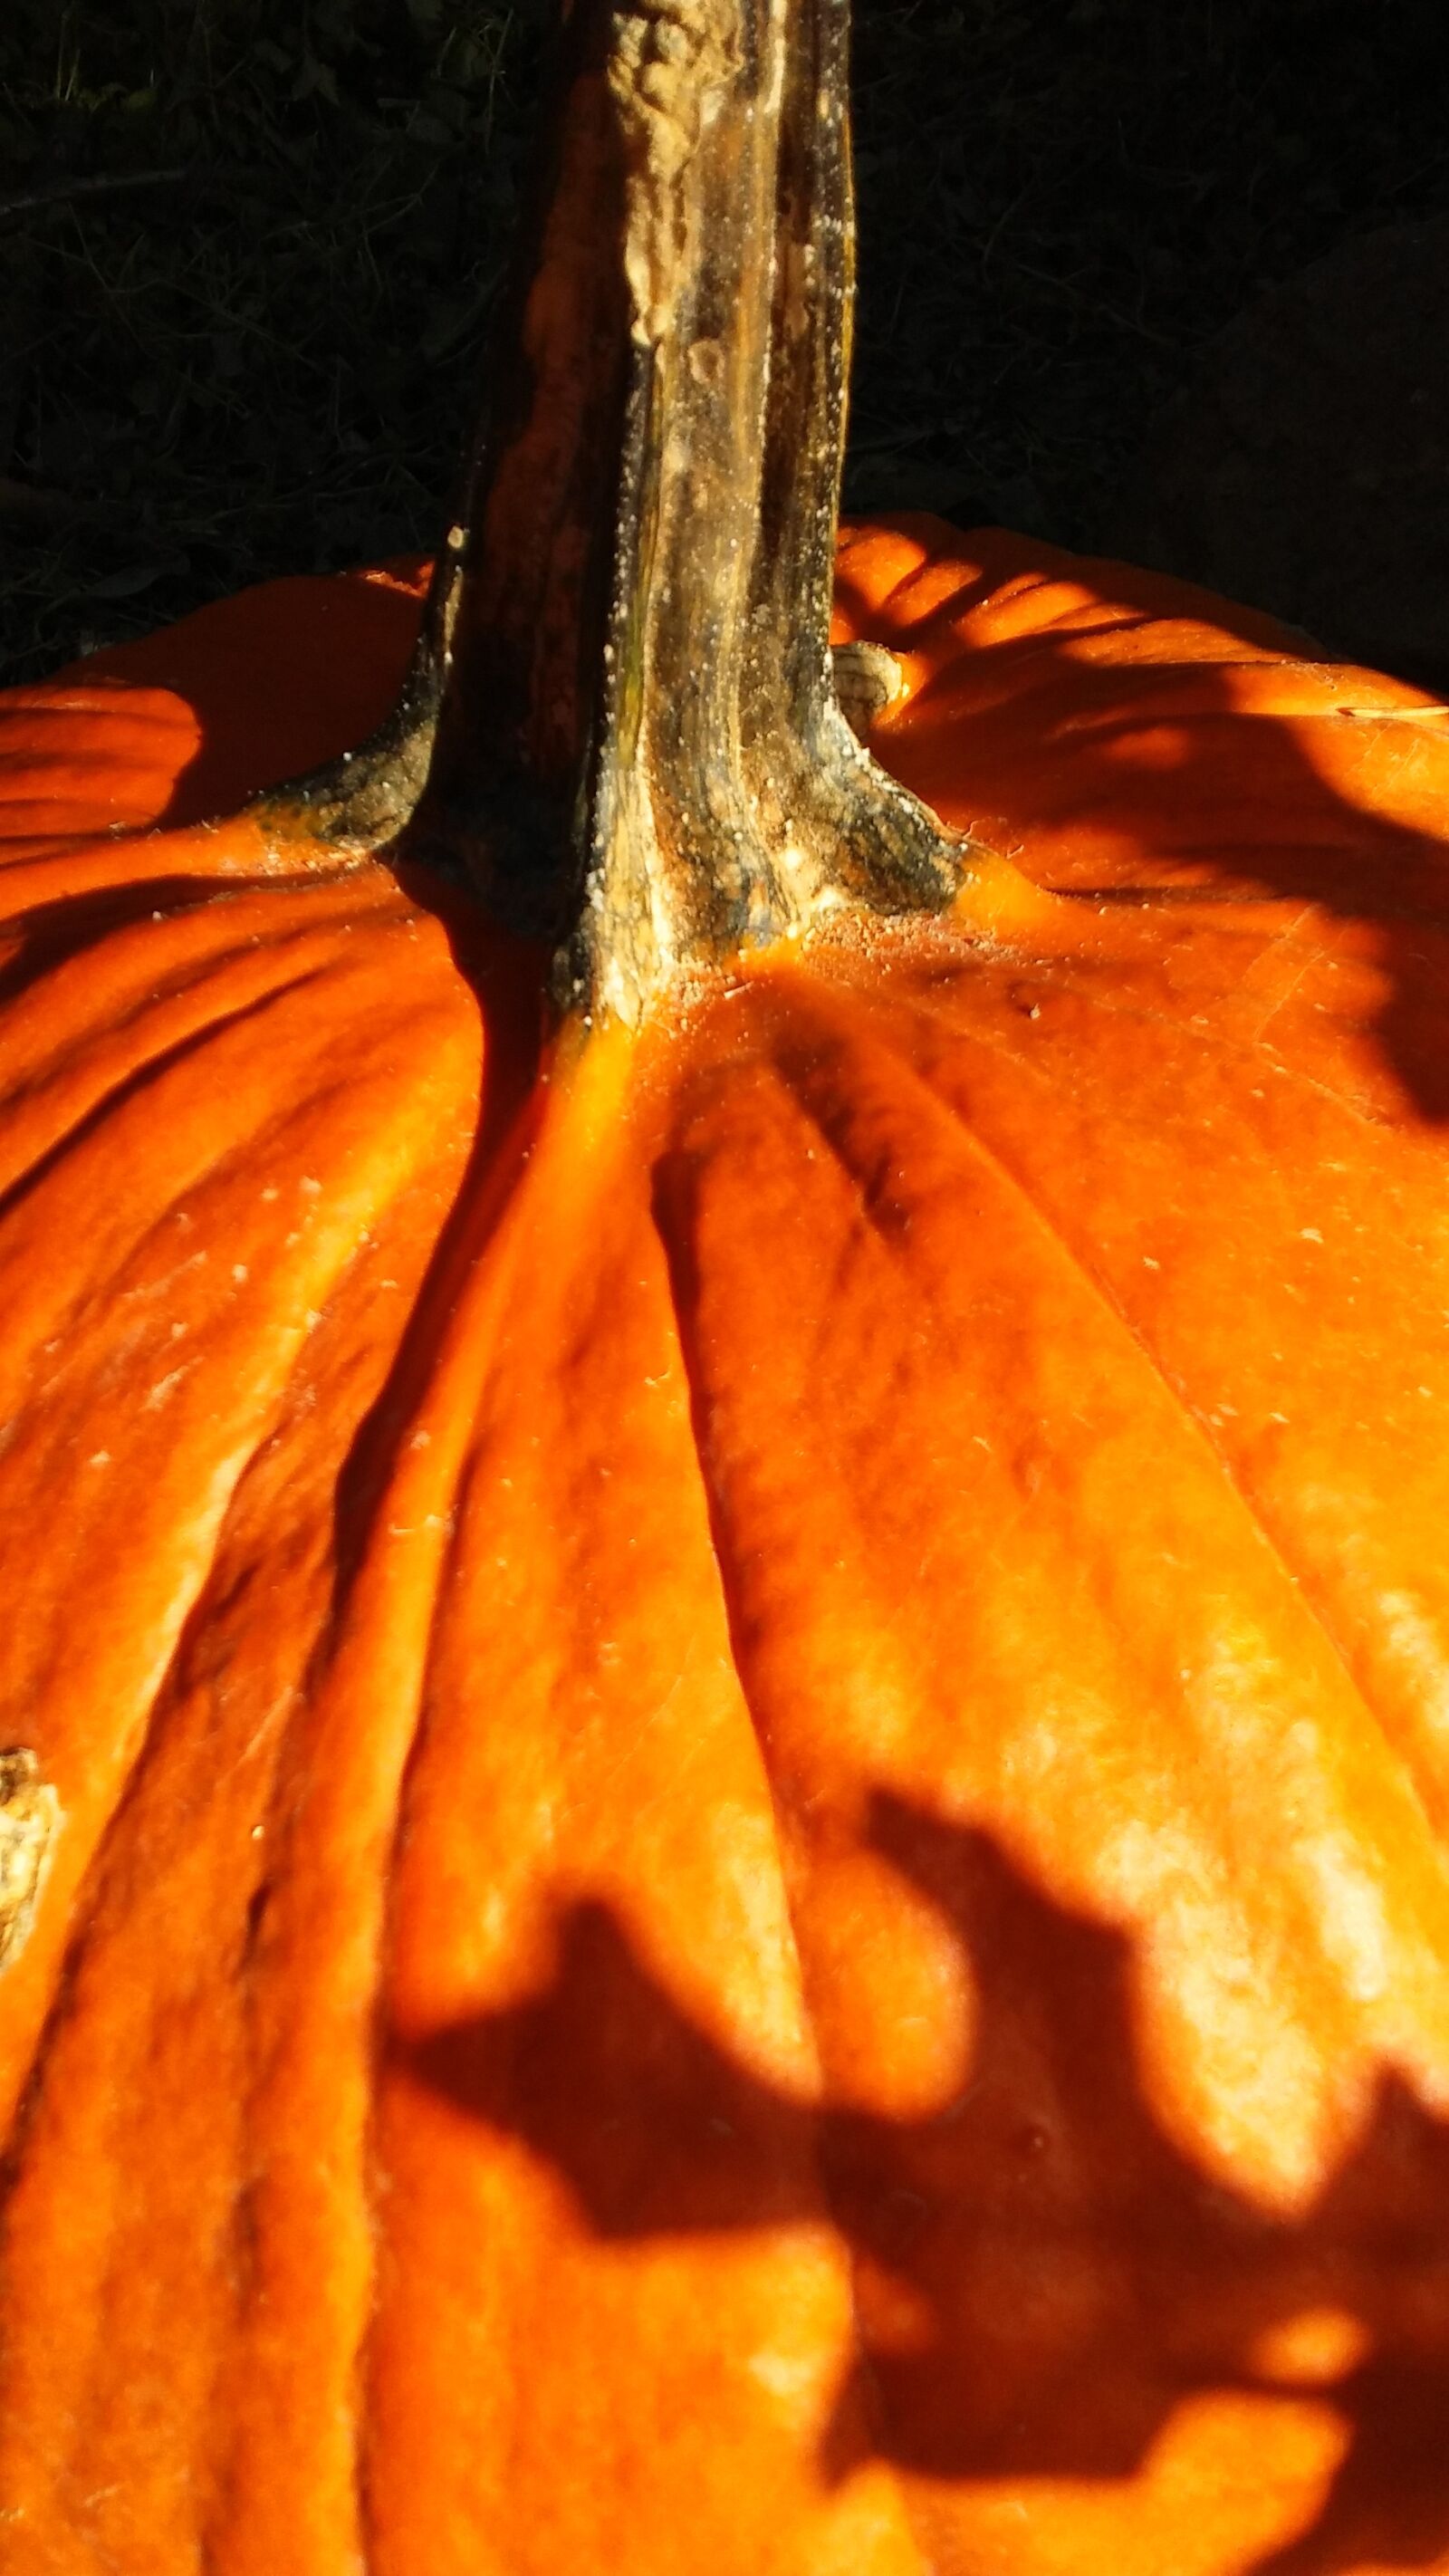 LG Premier sample photo. Fall, autumn, pumpkin photography